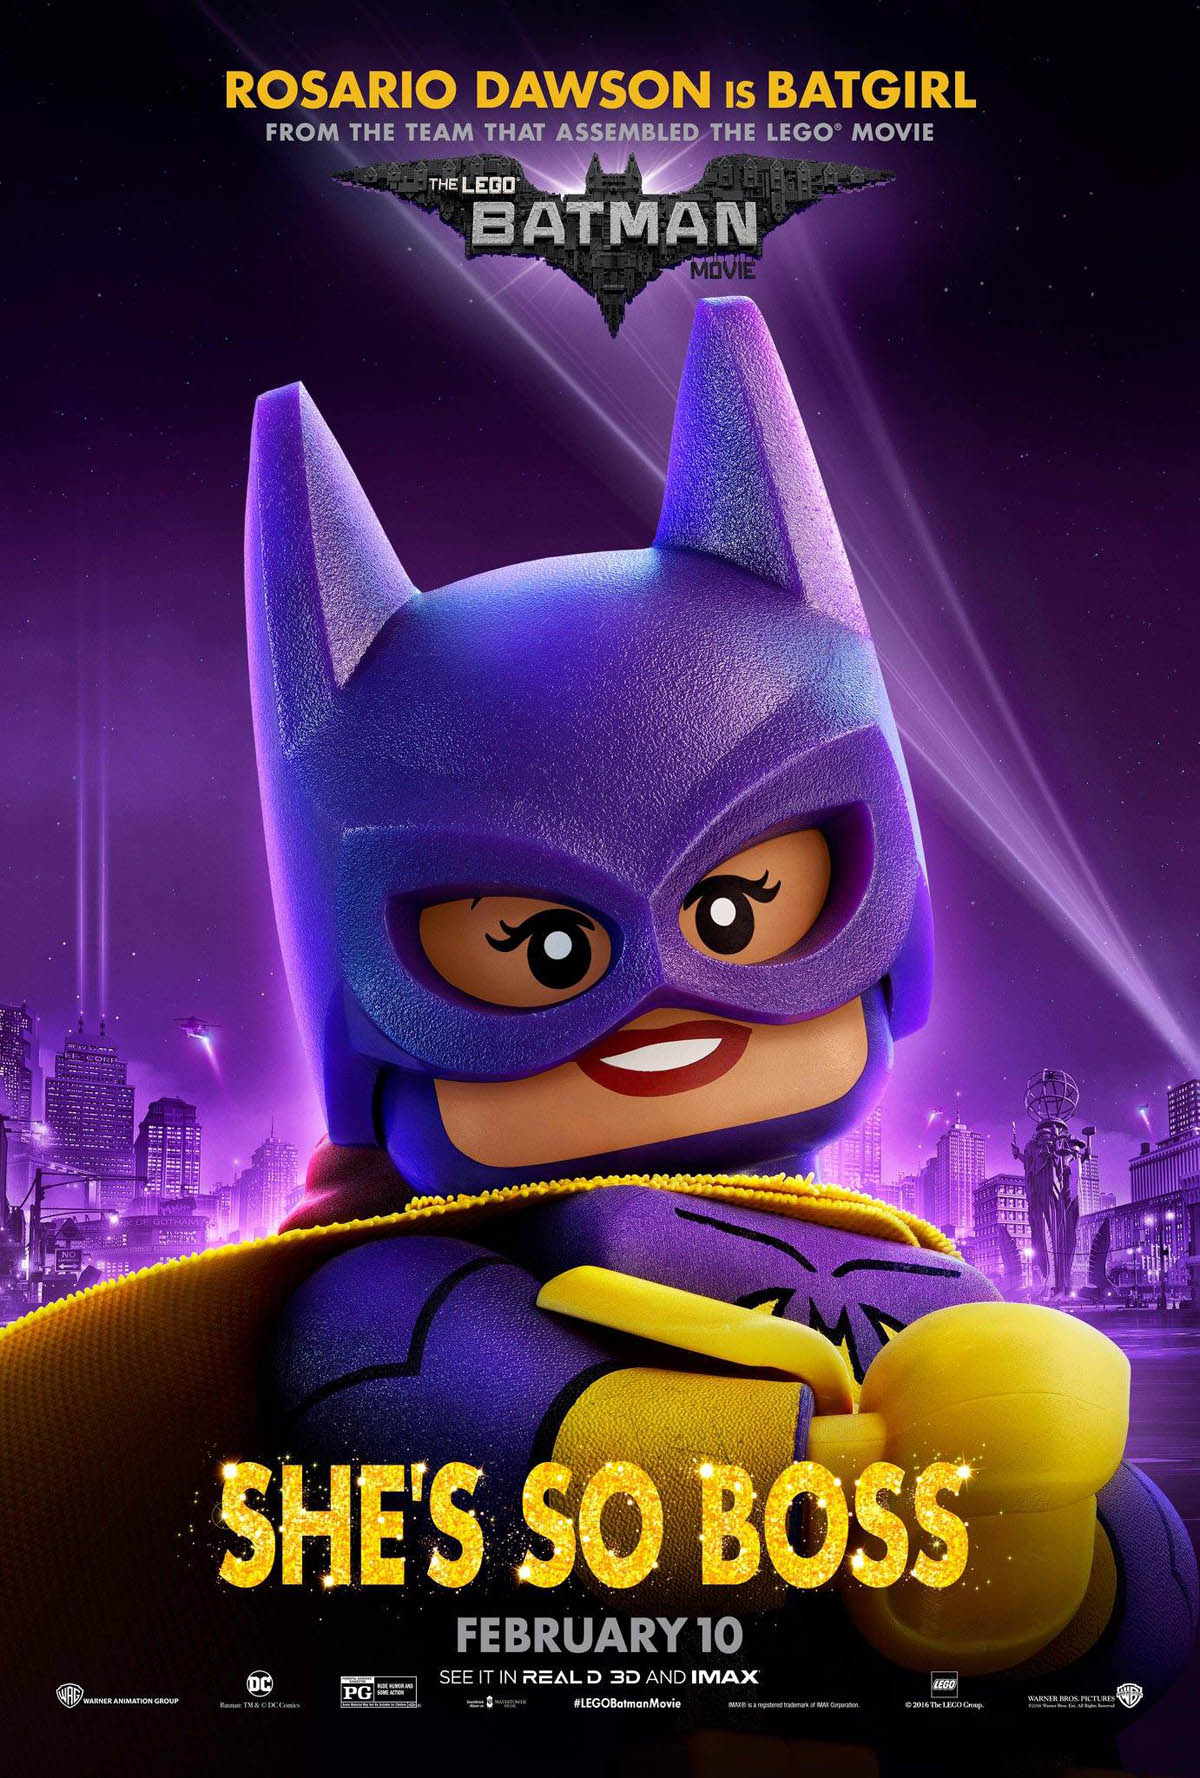 batgirl character 3d animation movie